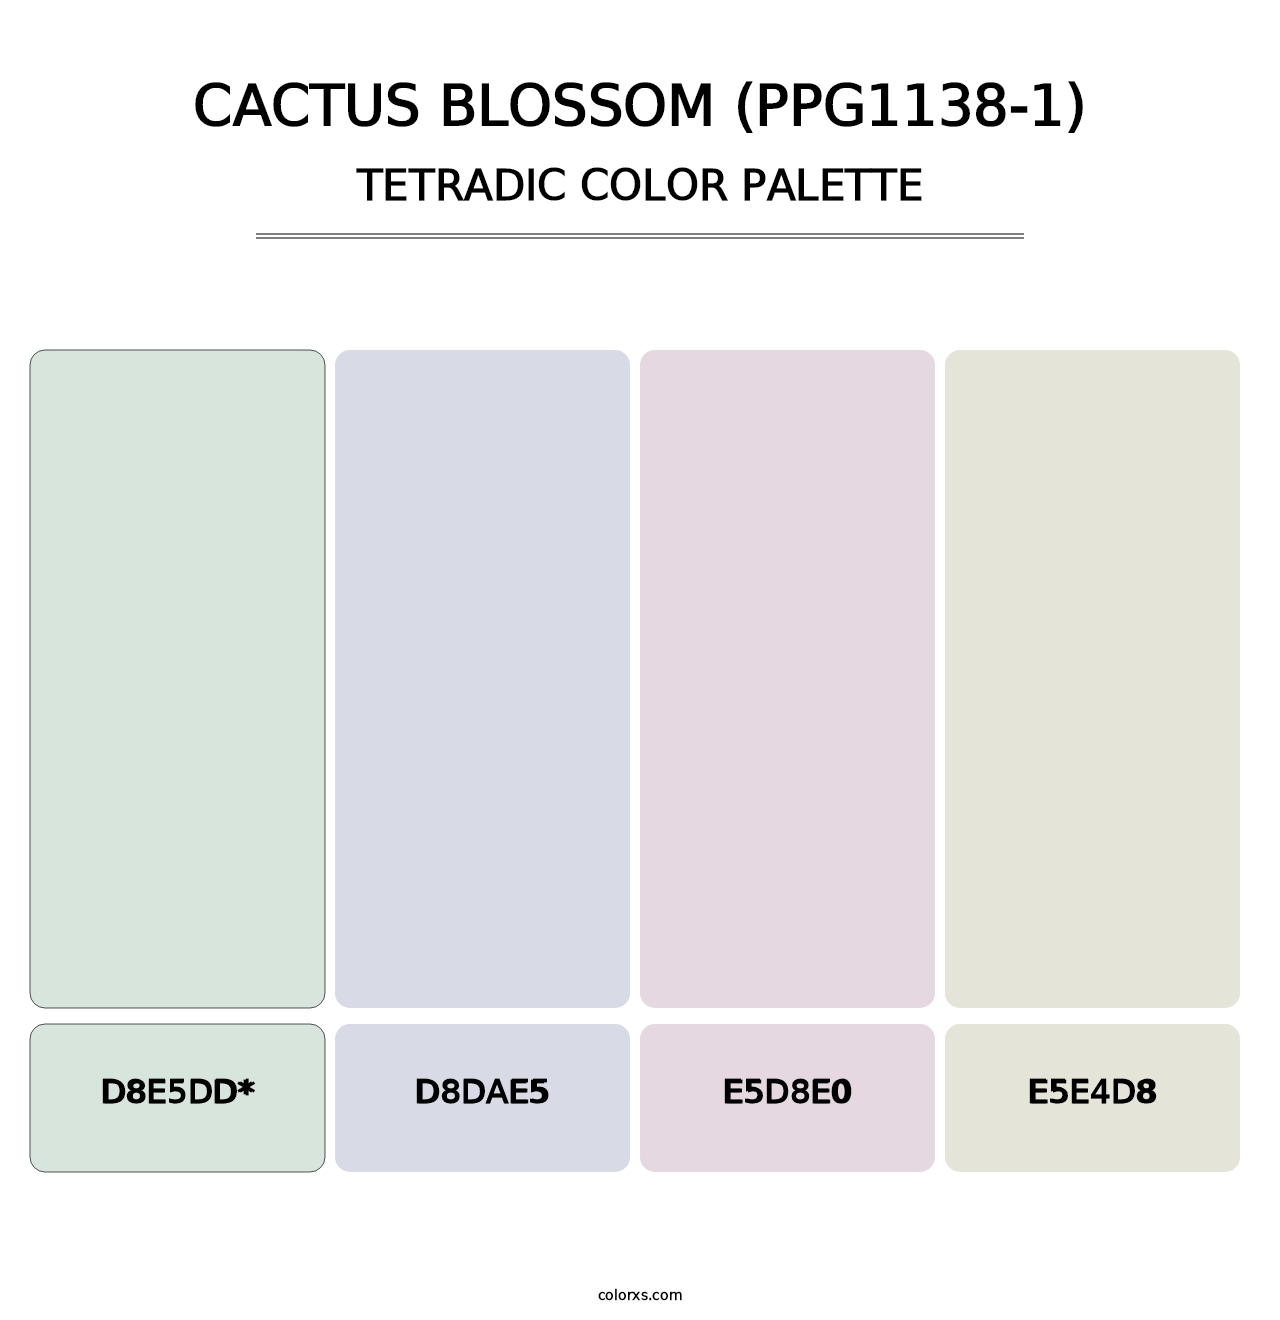 Cactus Blossom (PPG1138-1) - Tetradic Color Palette